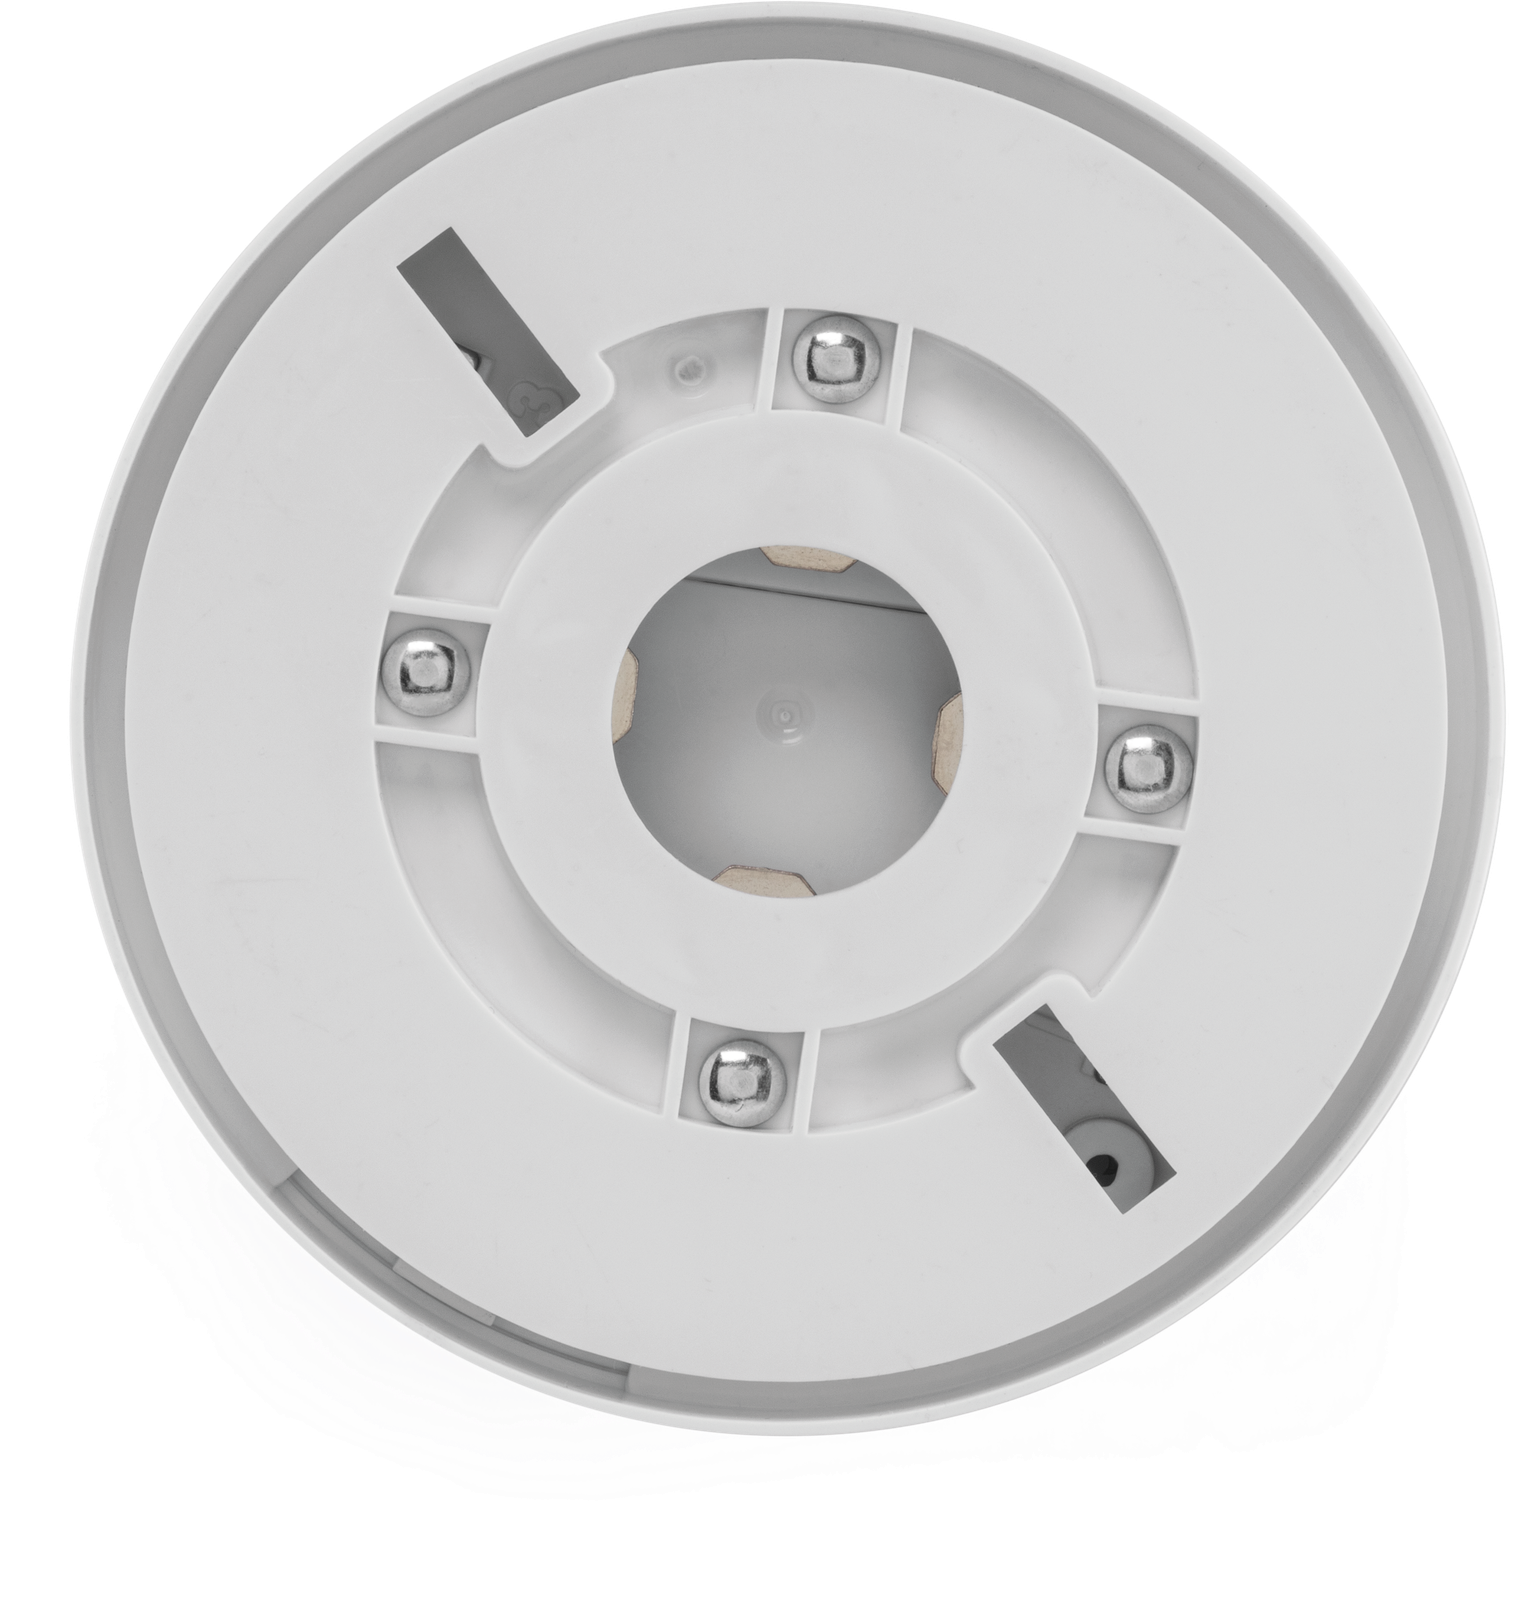 Detector De Fumaça Sensor De Incêndio Convencional Óptico Intelbras Dfc 421 Un Branco - 6